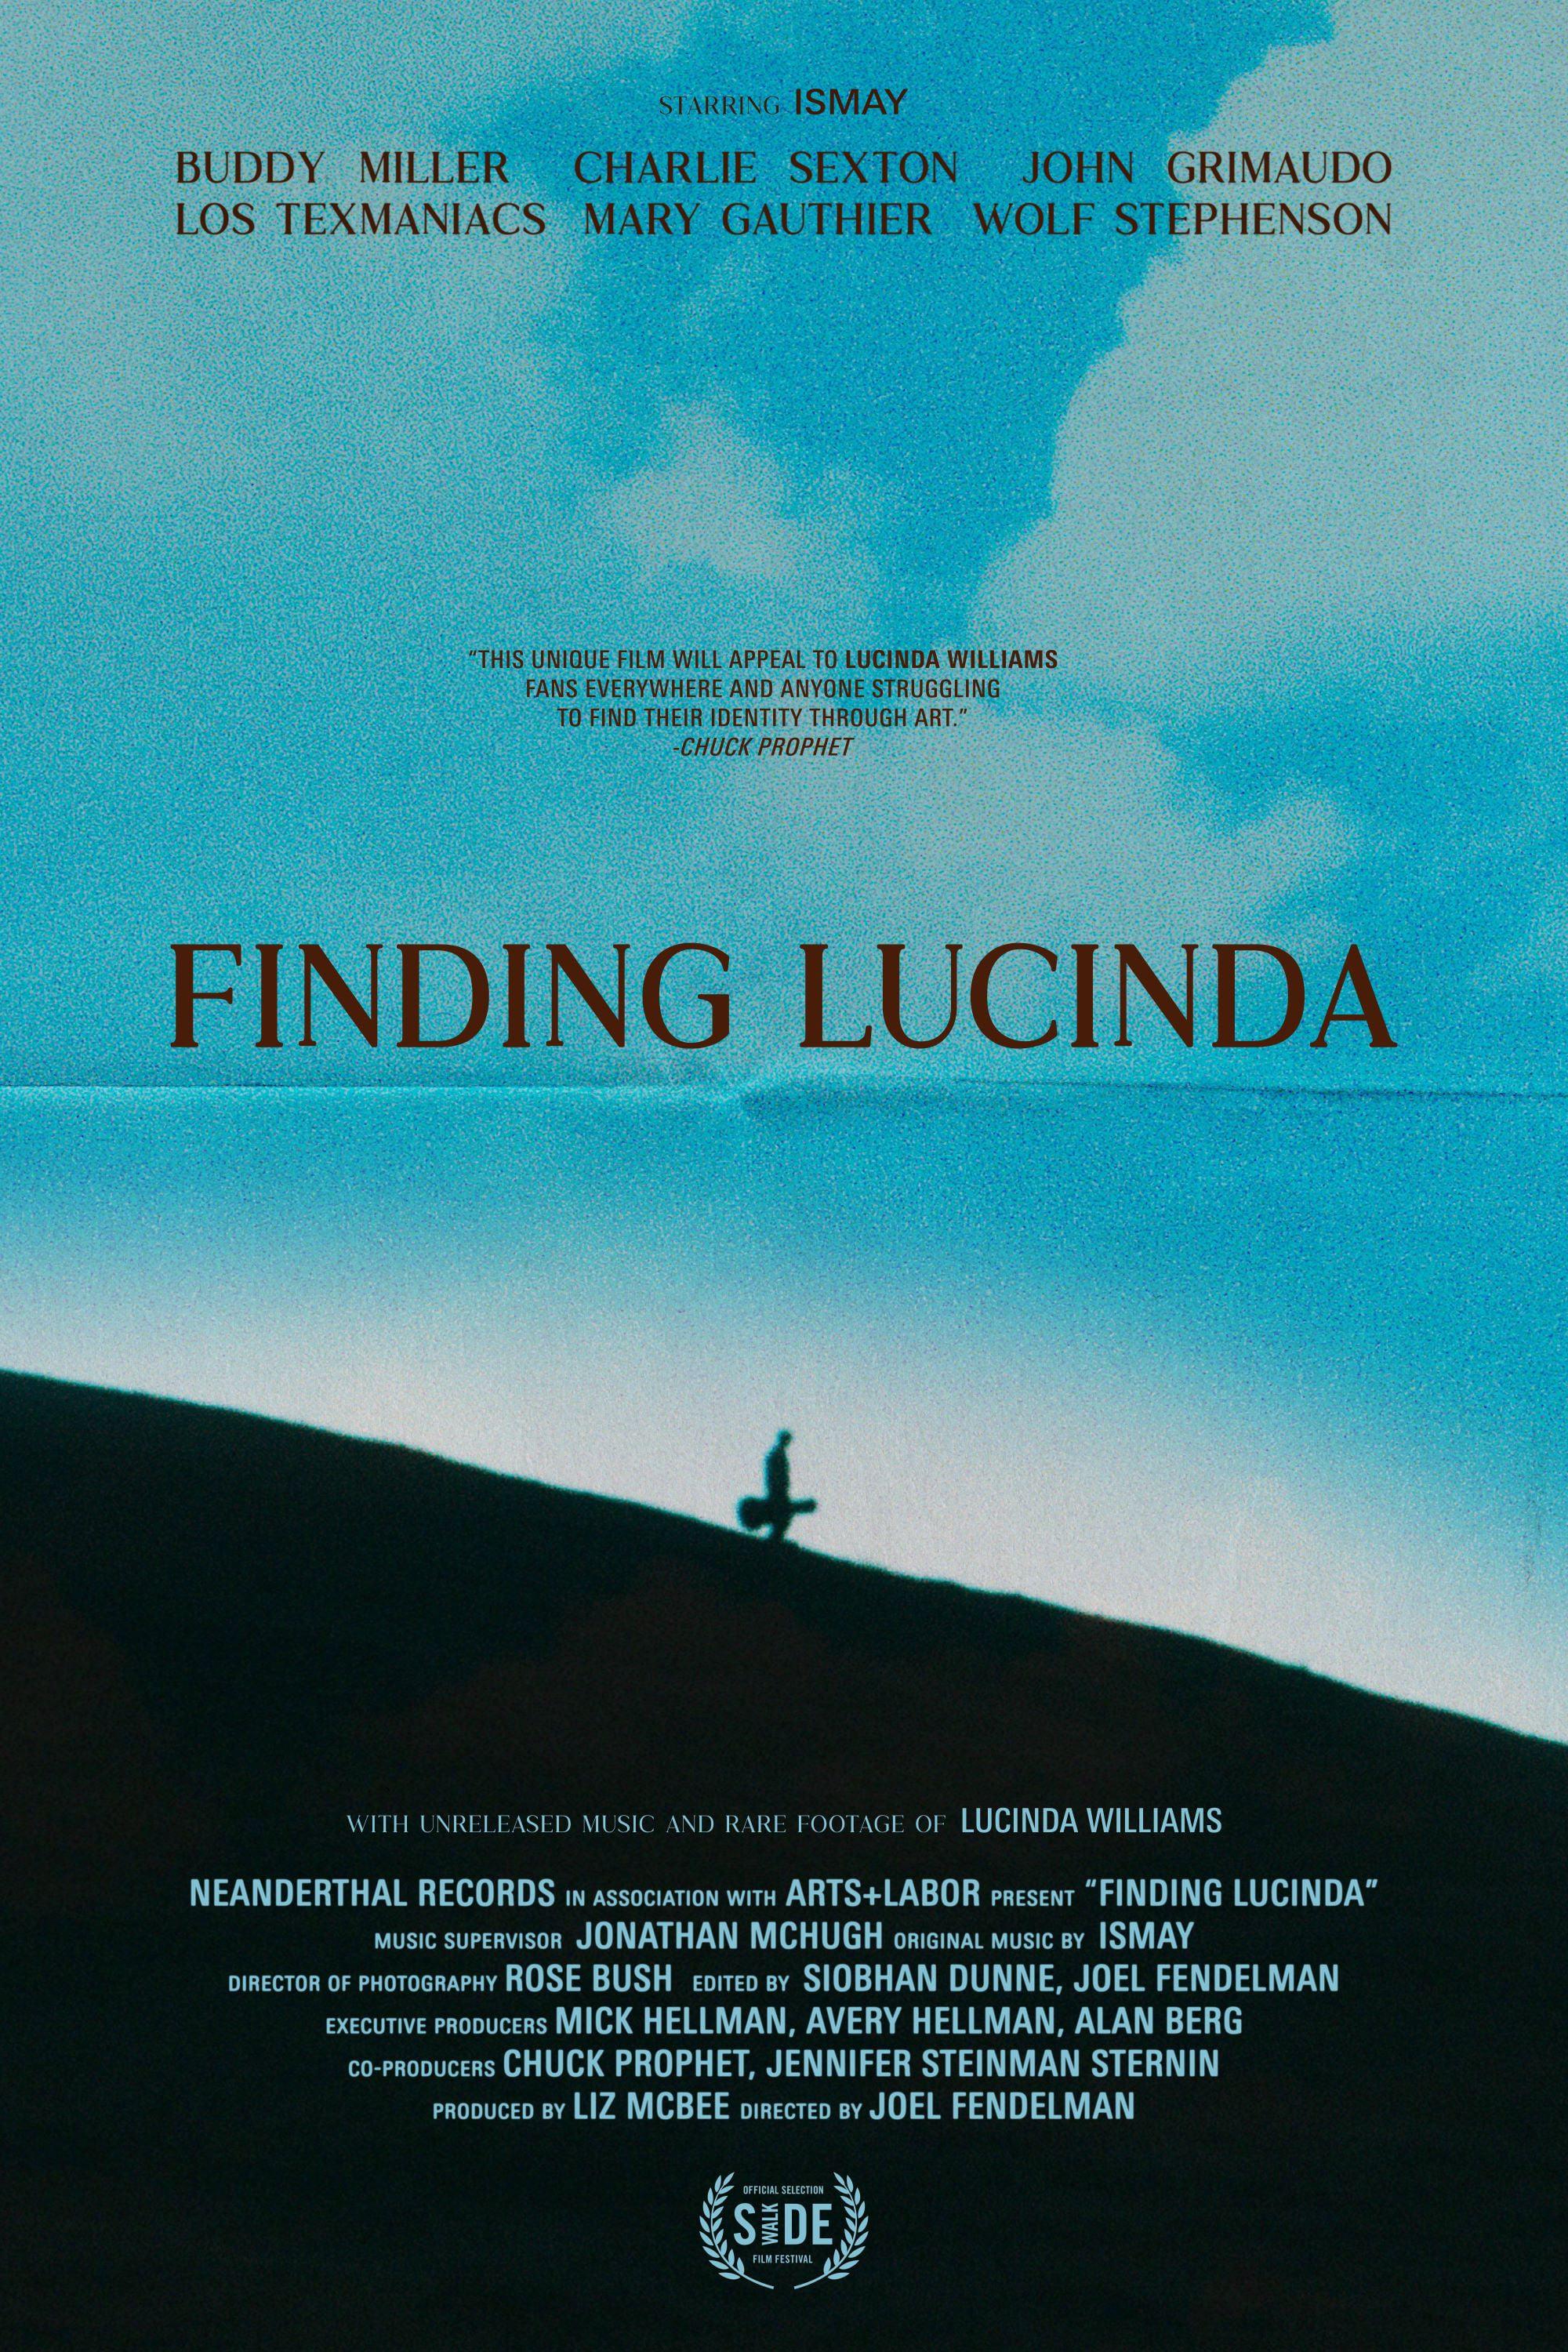 Finding Lucinda poster